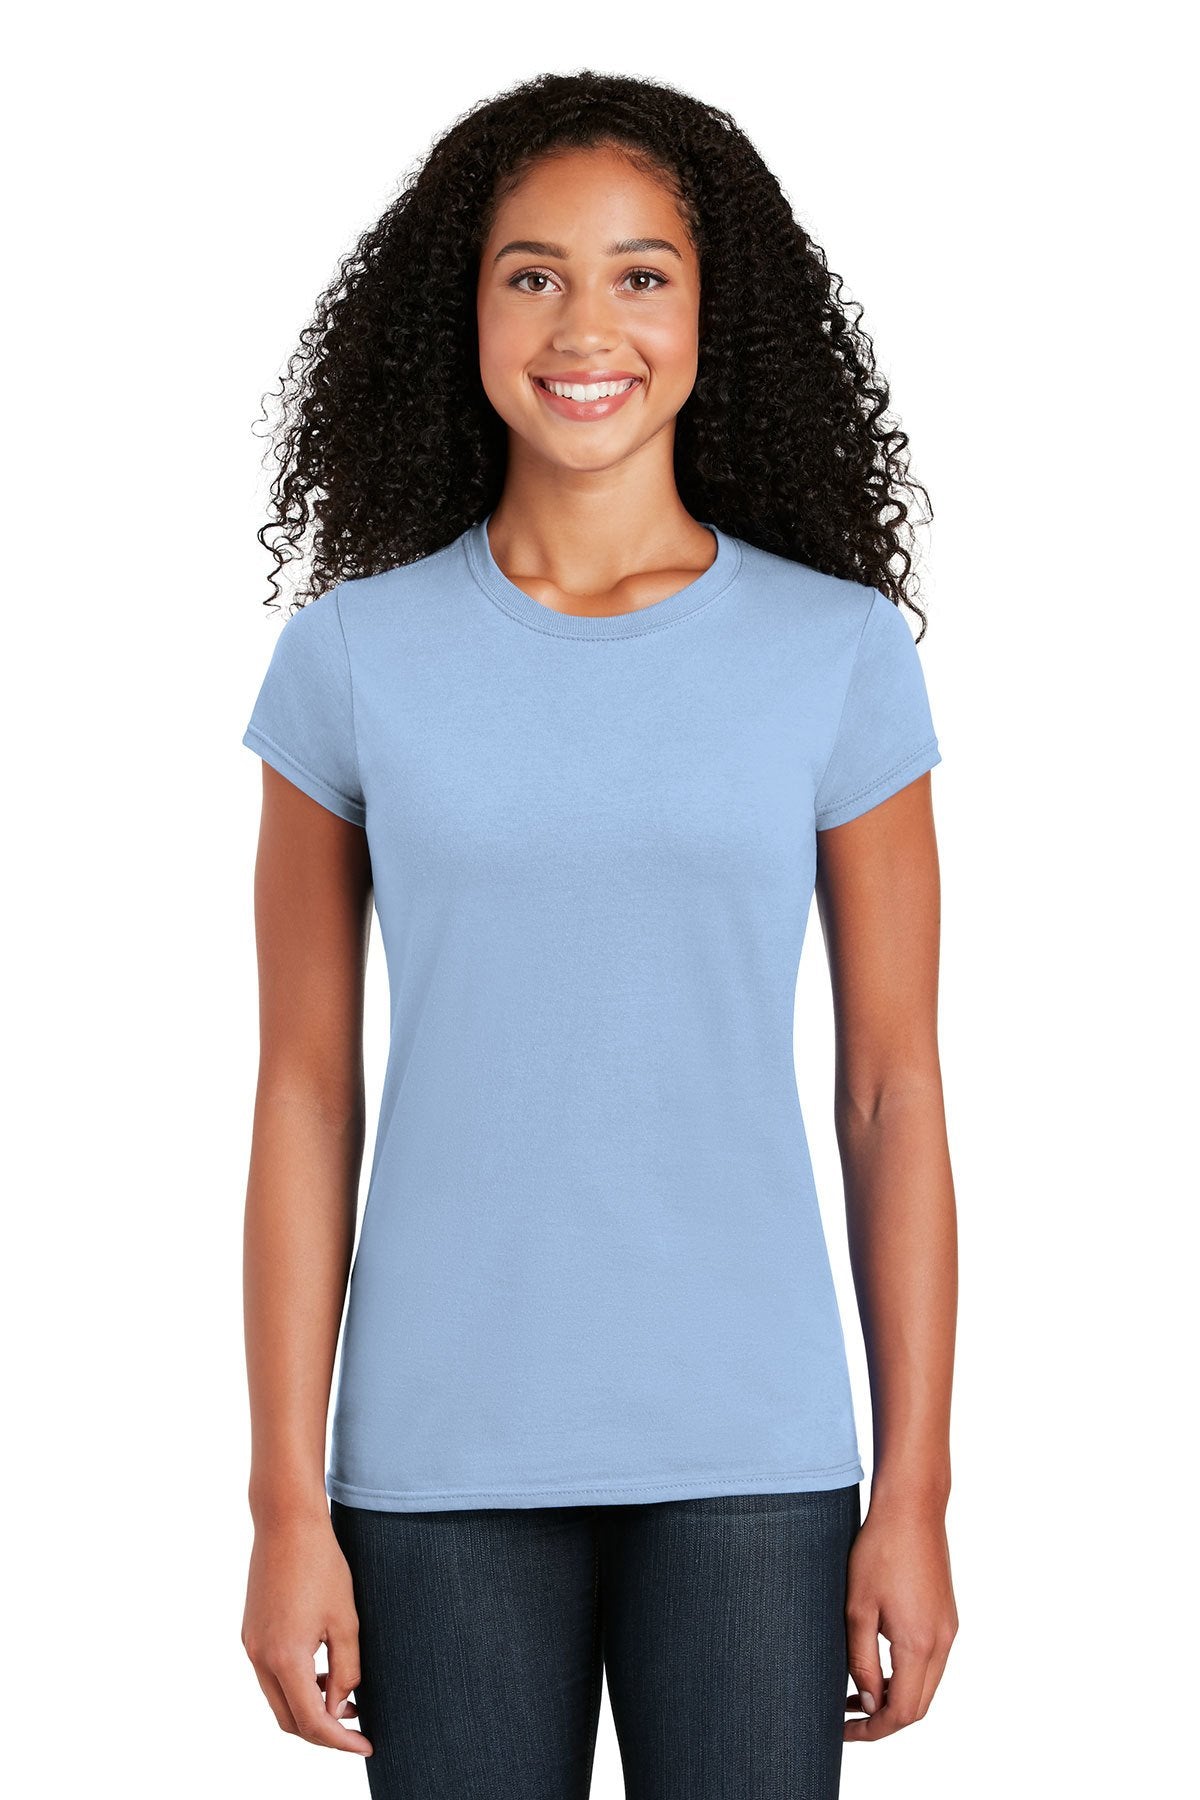 Gildan Softstyle Ladies T Shirt in Light Blue, add a ...